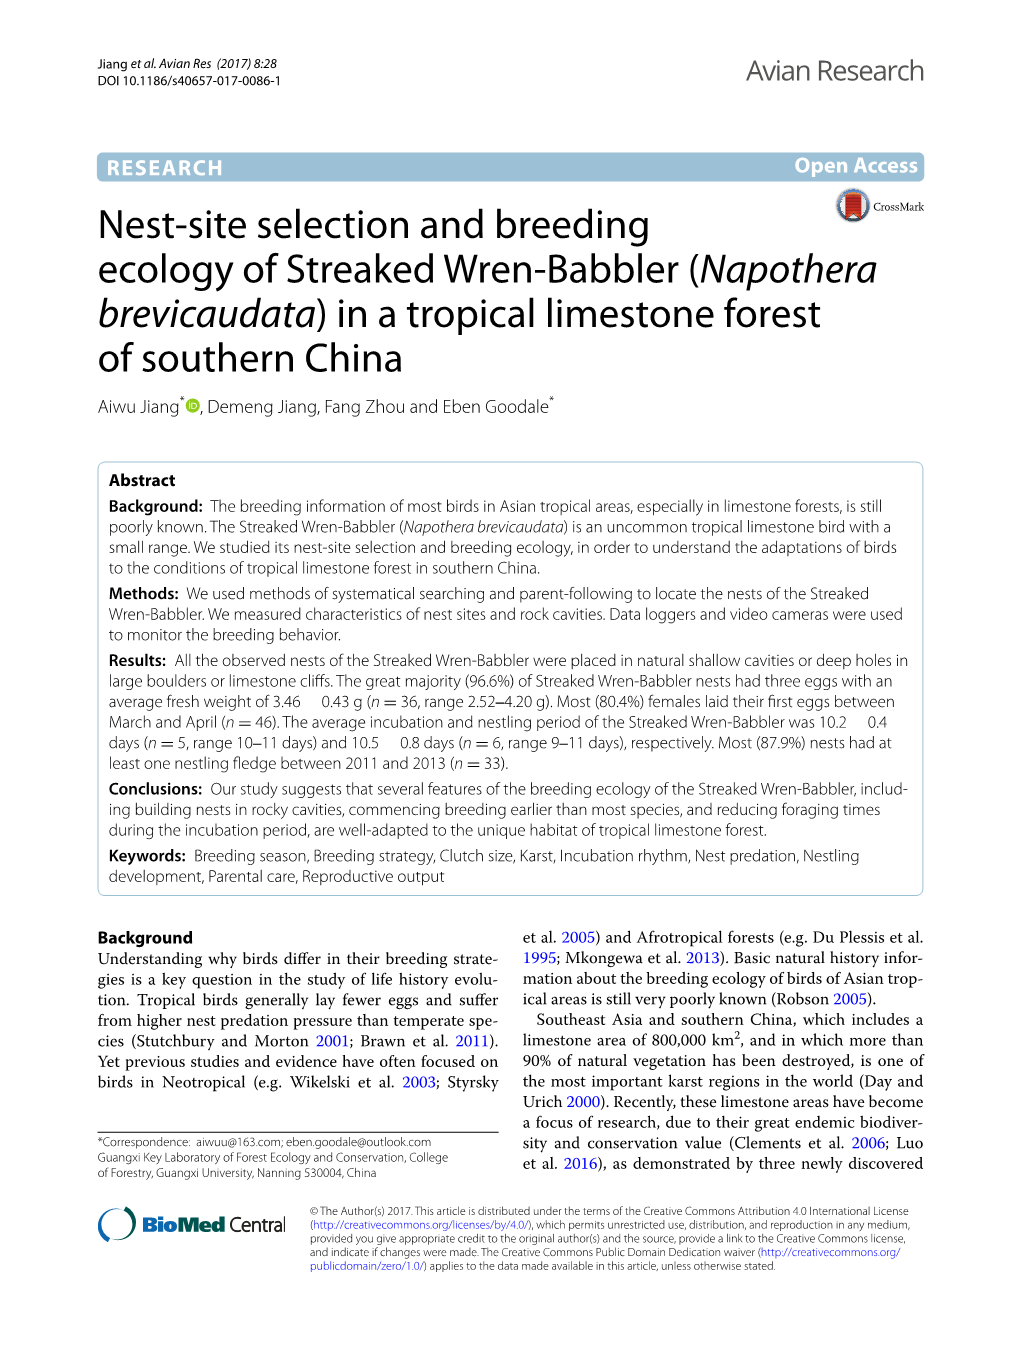 Napothera Brevicaudata) in a Tropical Limestone Forest of Southern China Aiwu Jiang* , Demeng Jiang, Fang Zhou and Eben Goodale*